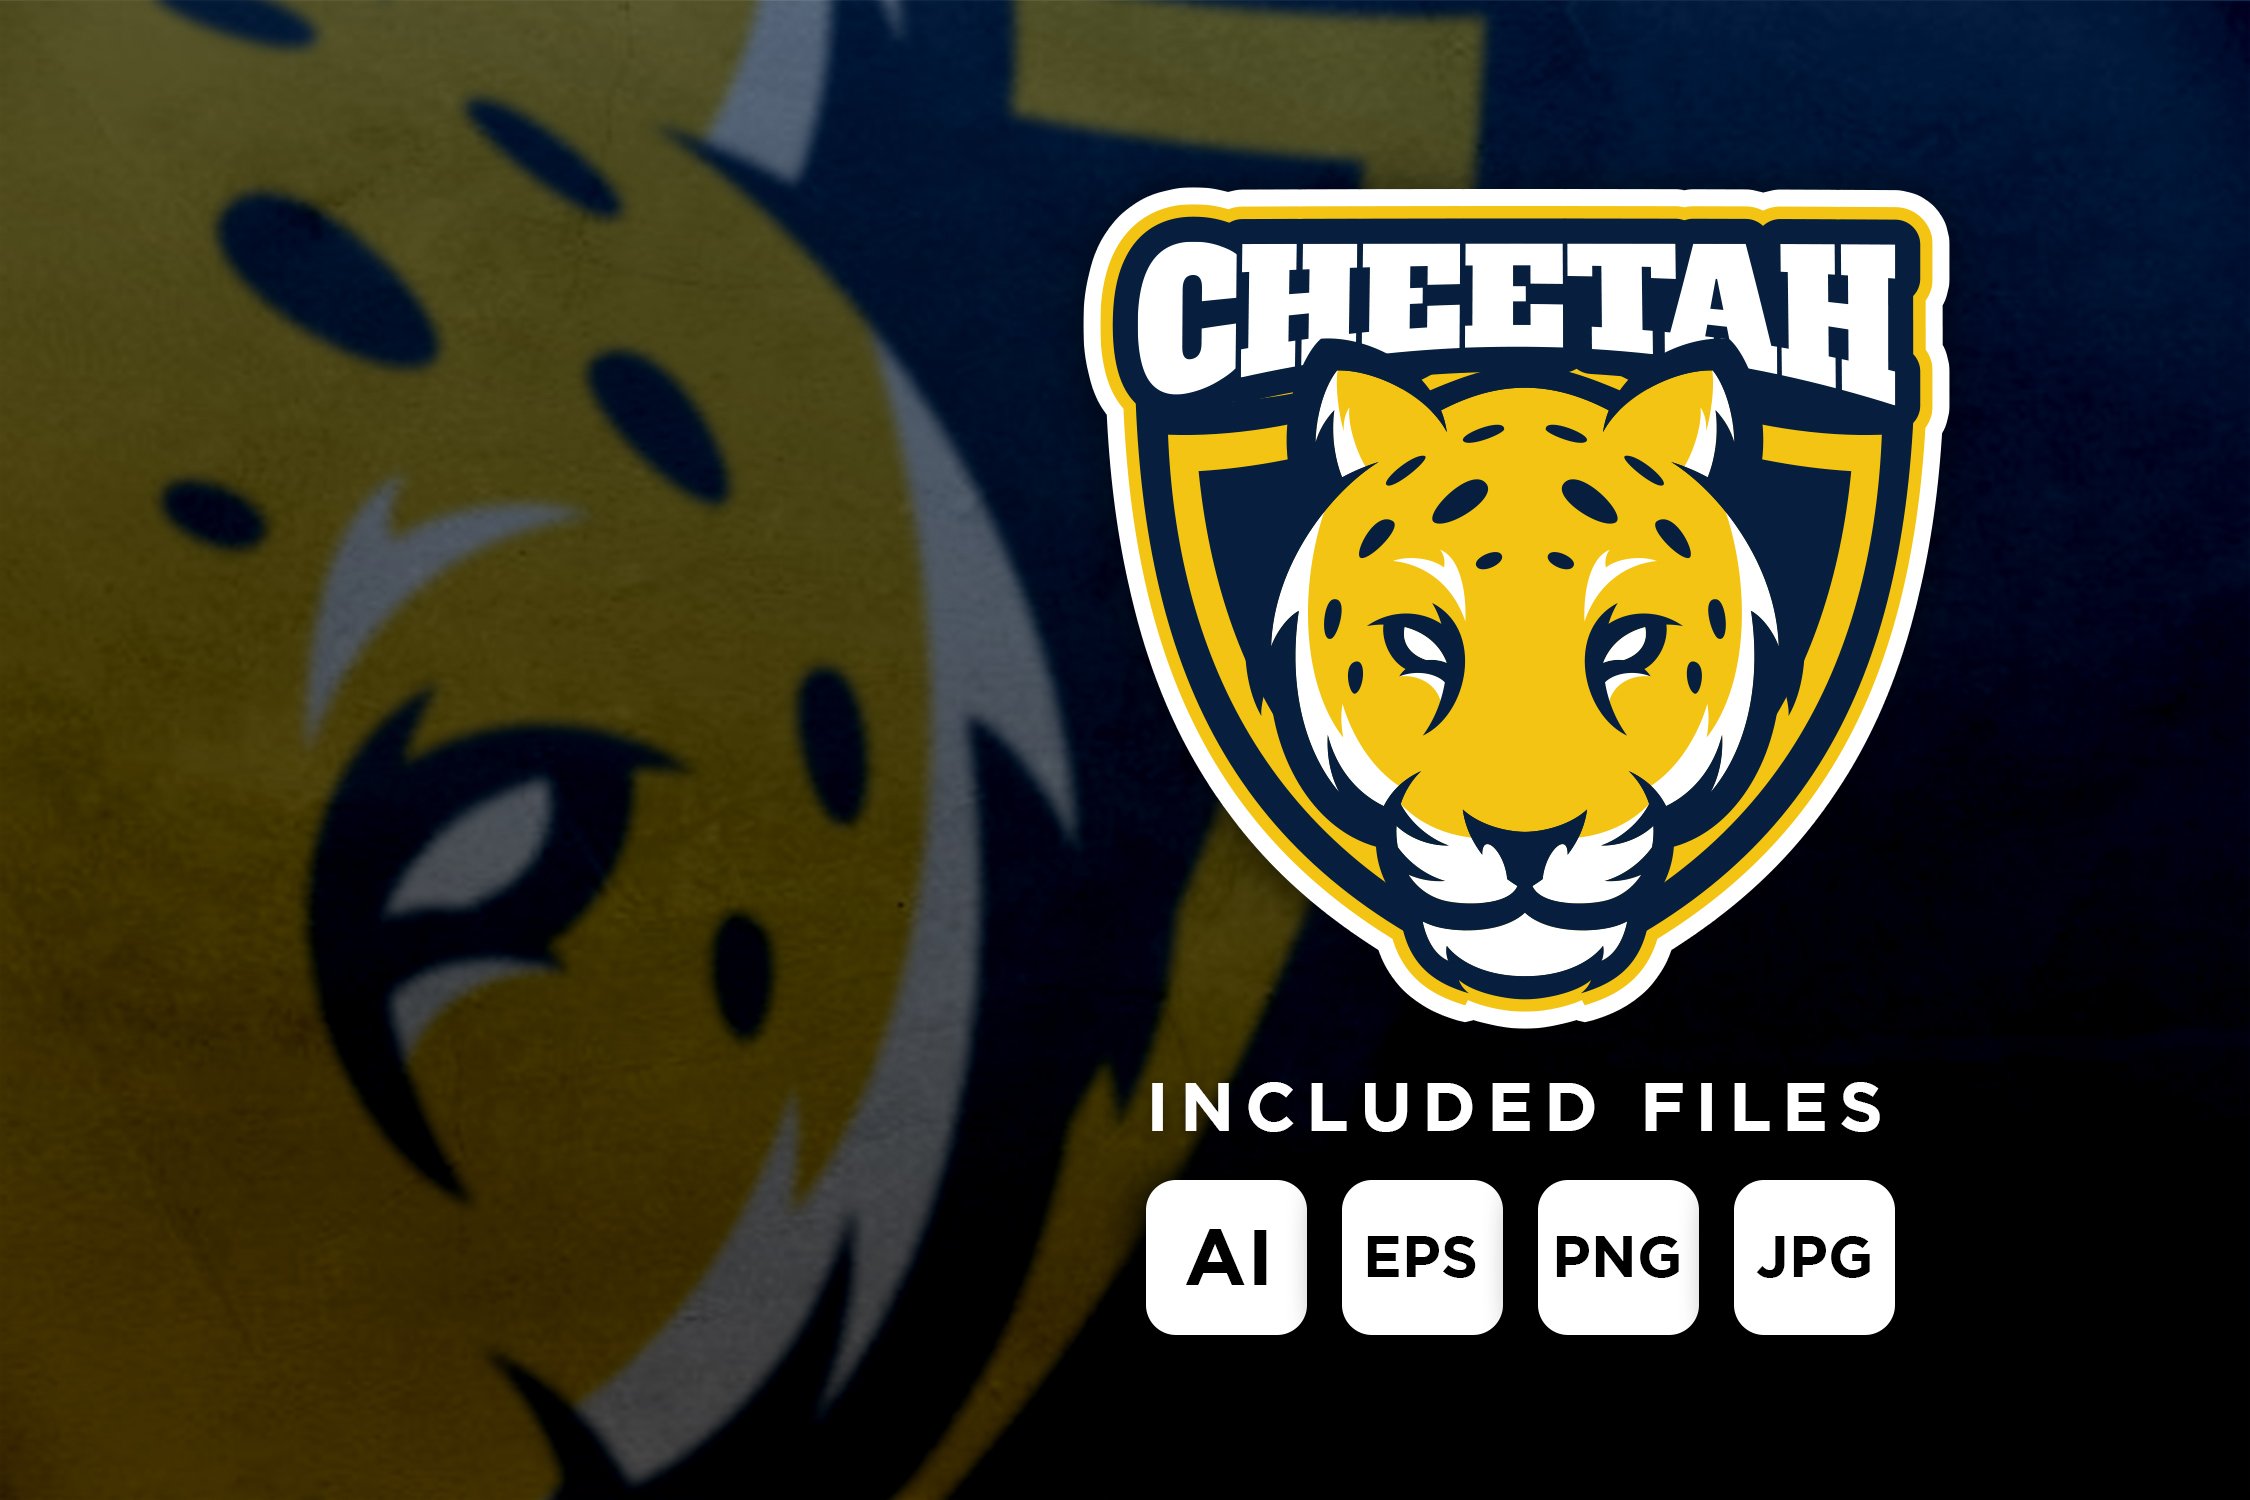 Cheetah - mascot logo for a team cover image.